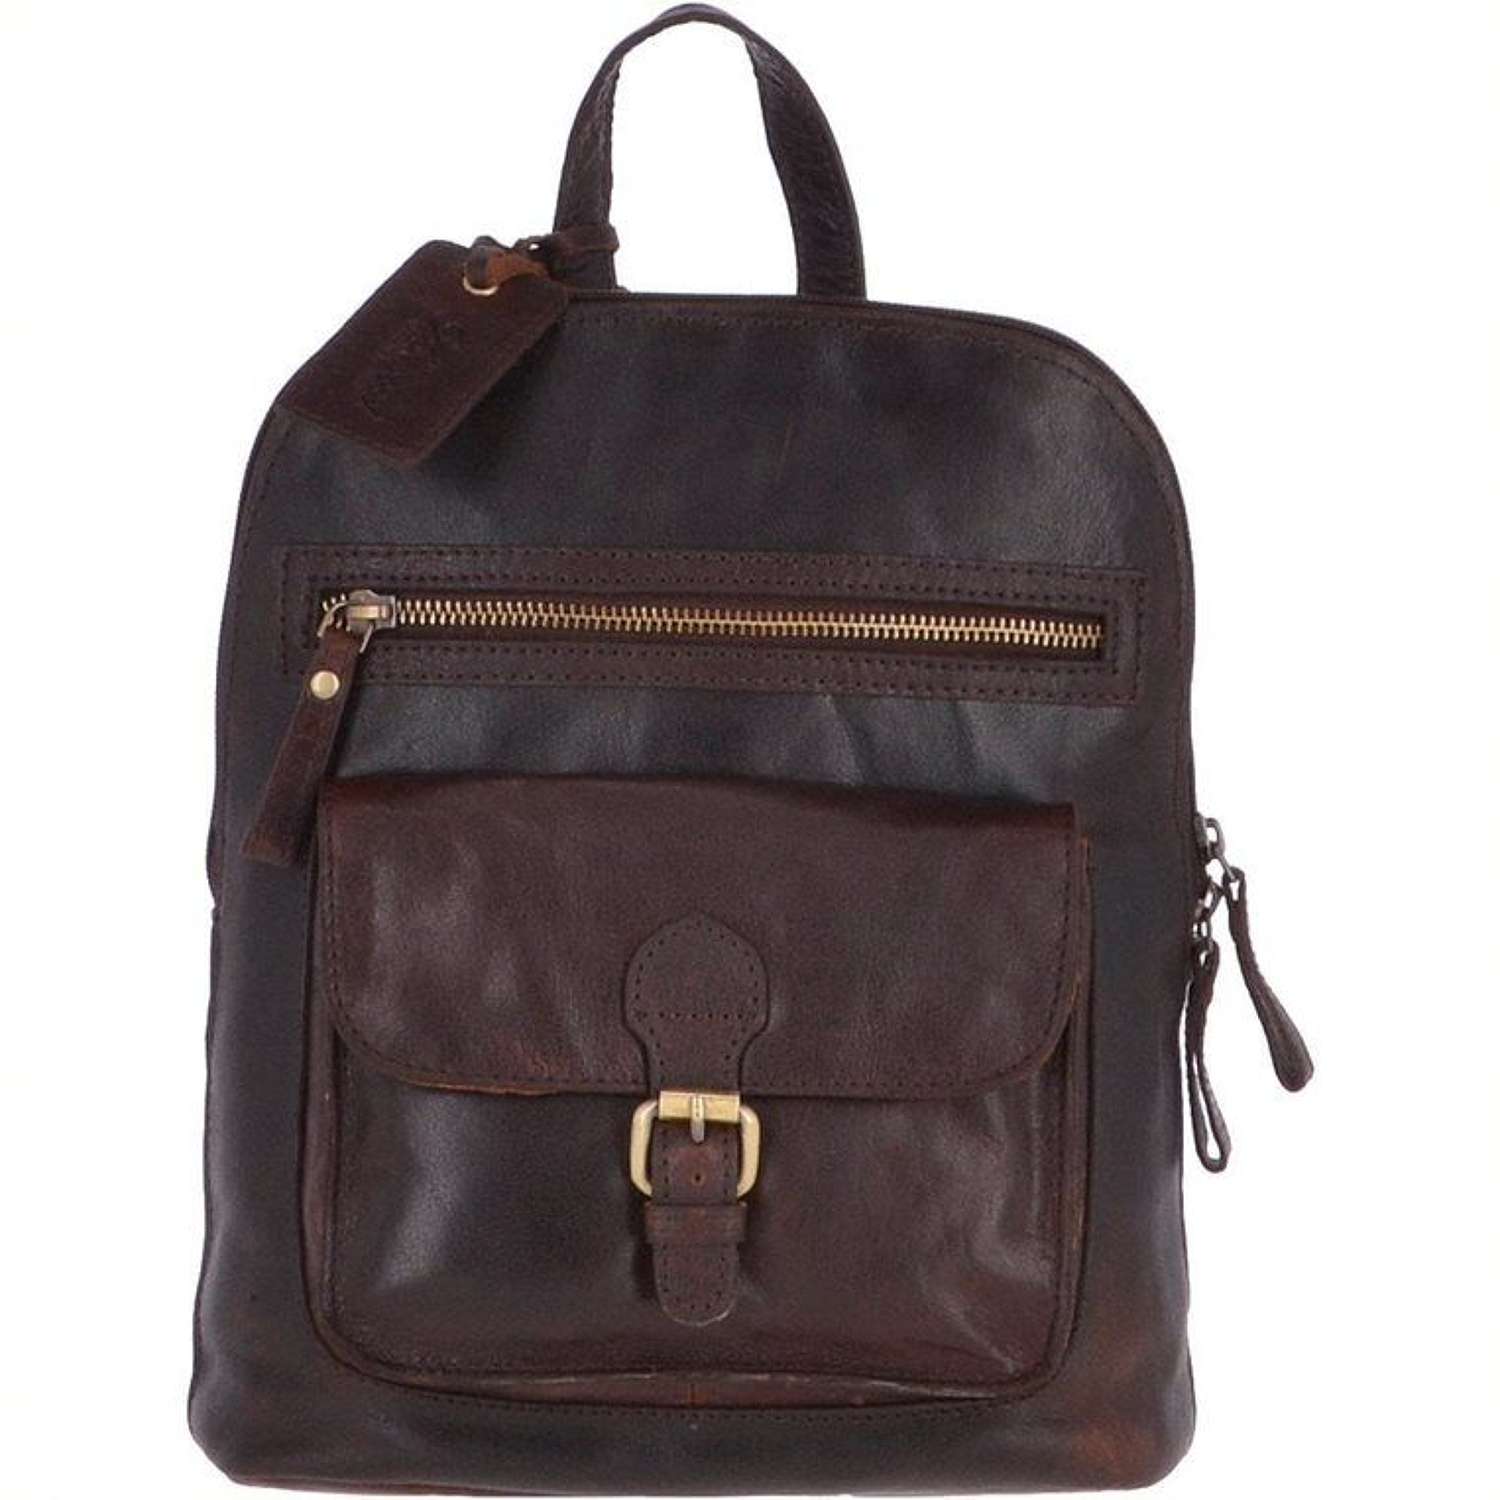 Leather Handbag Brandy - G-25